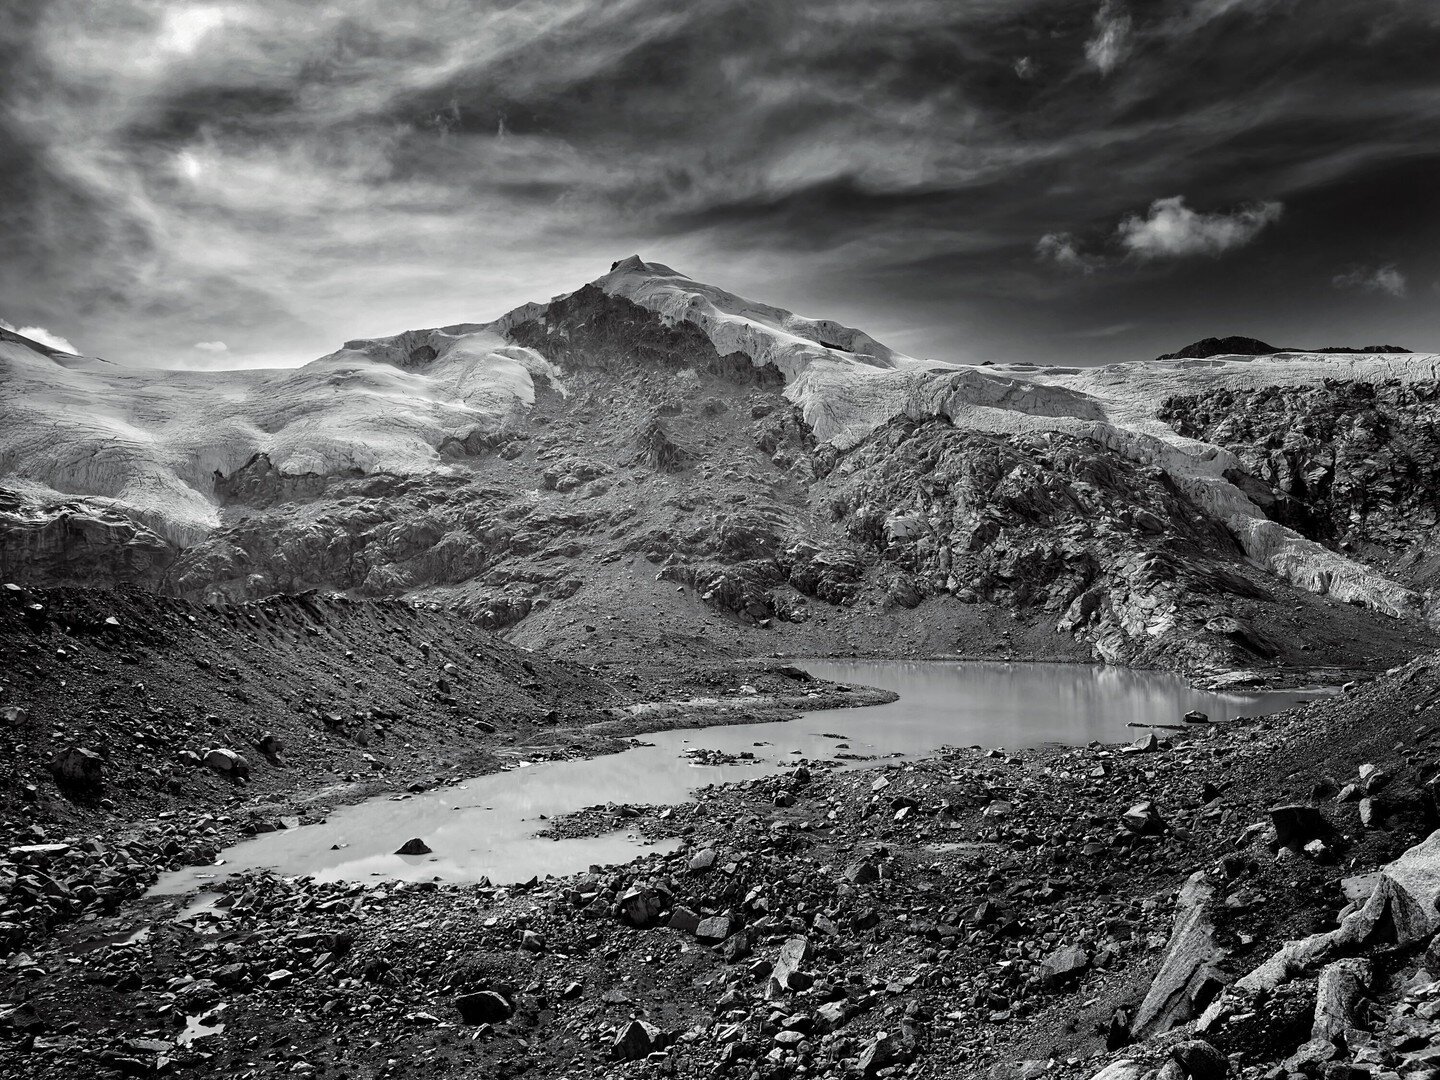 Landscapes of the Cordillera Blanca, Peru